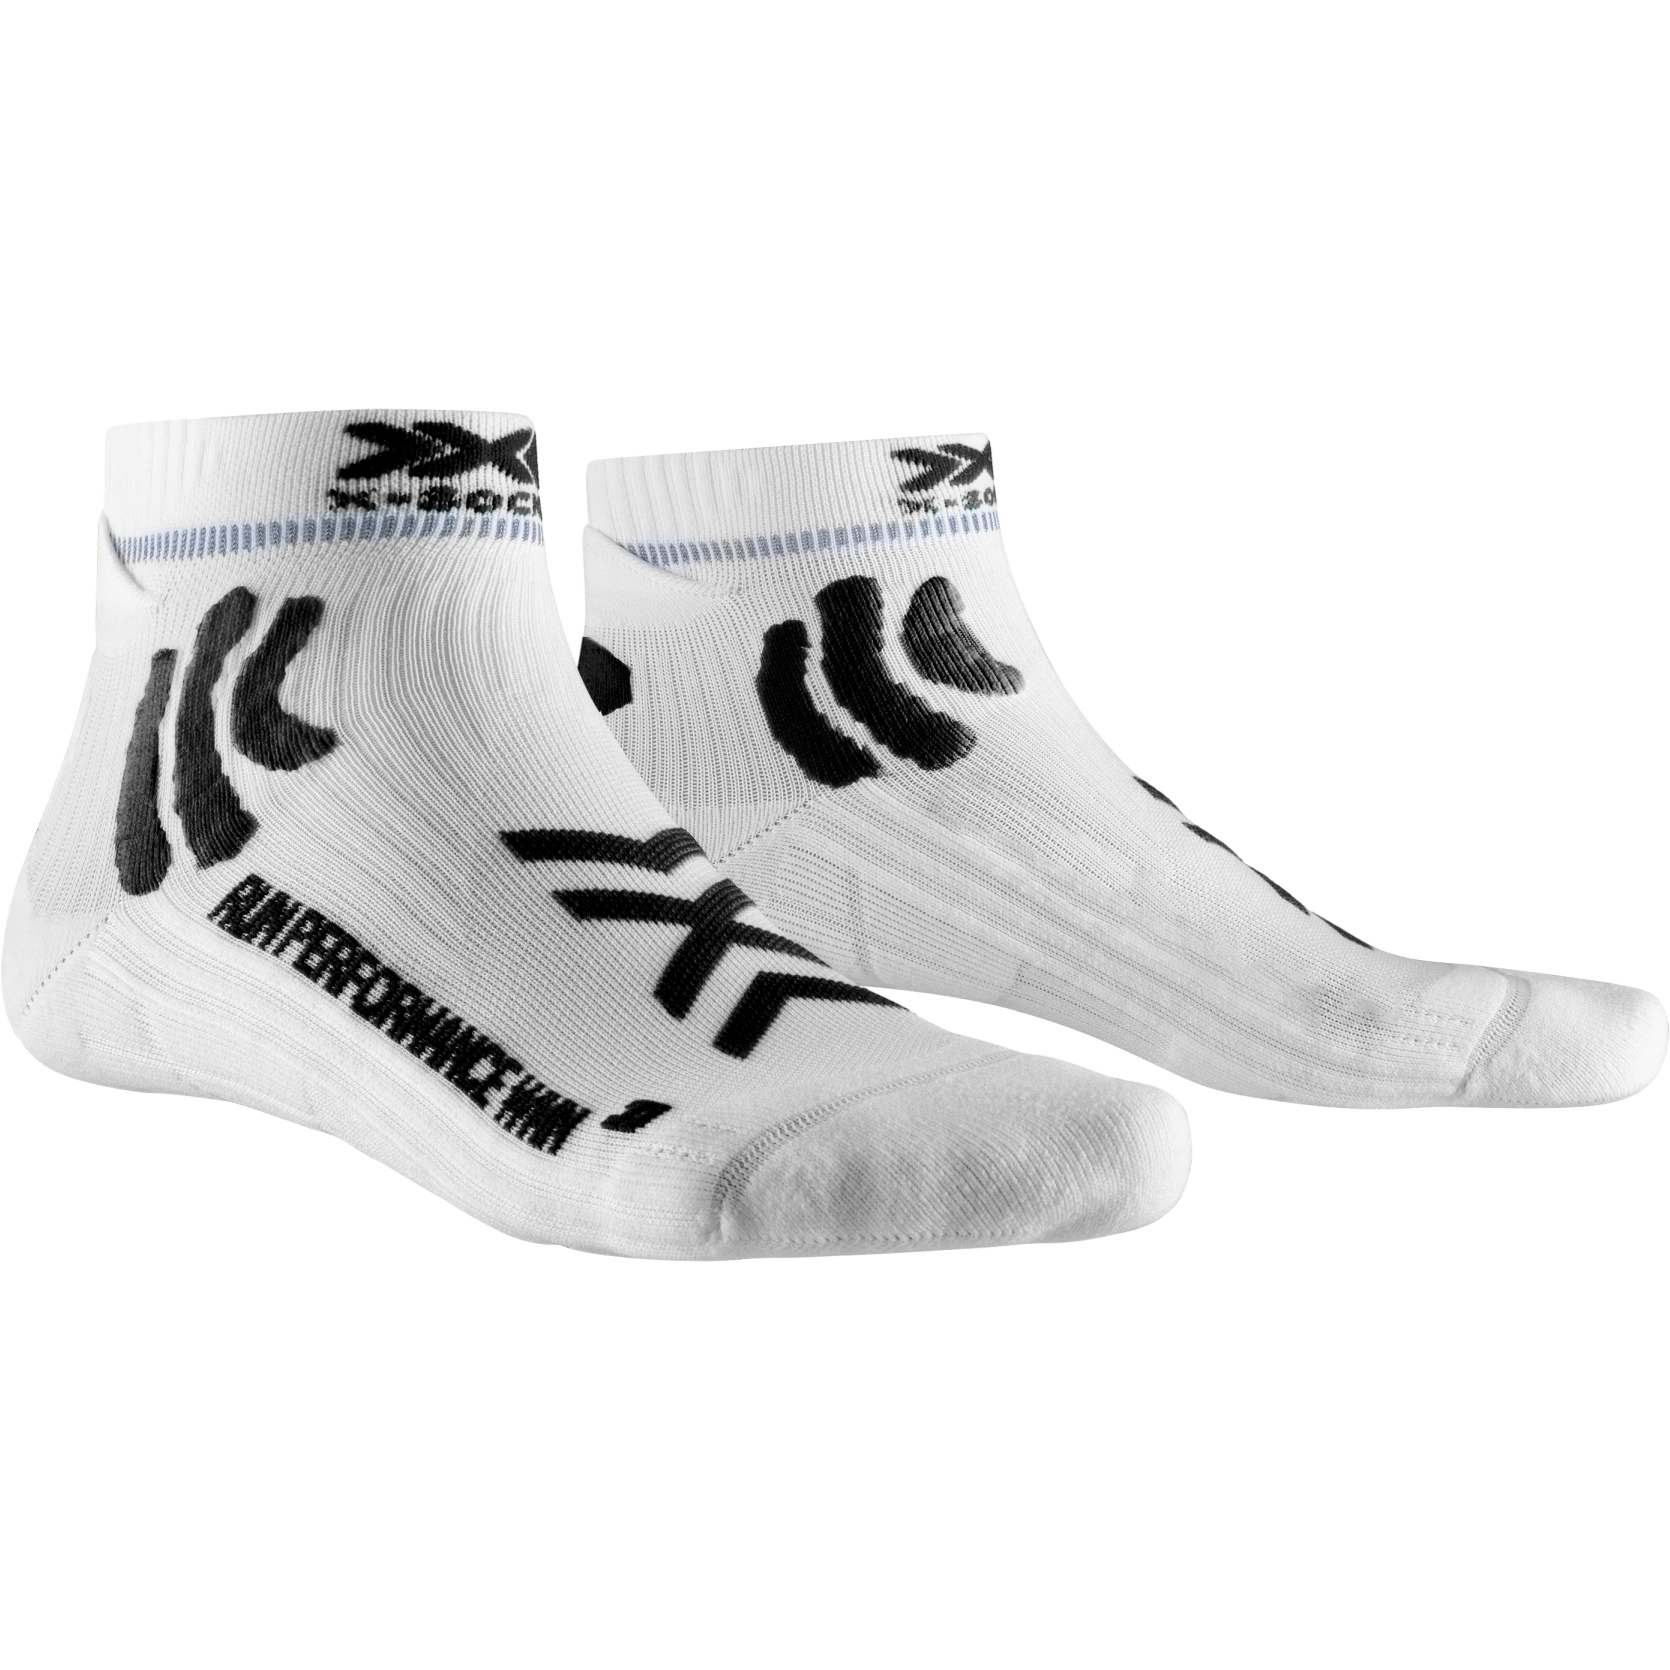 Productfoto van X-Socks Run Performance 4.0 Hardloopsokken - arctic white/opal black